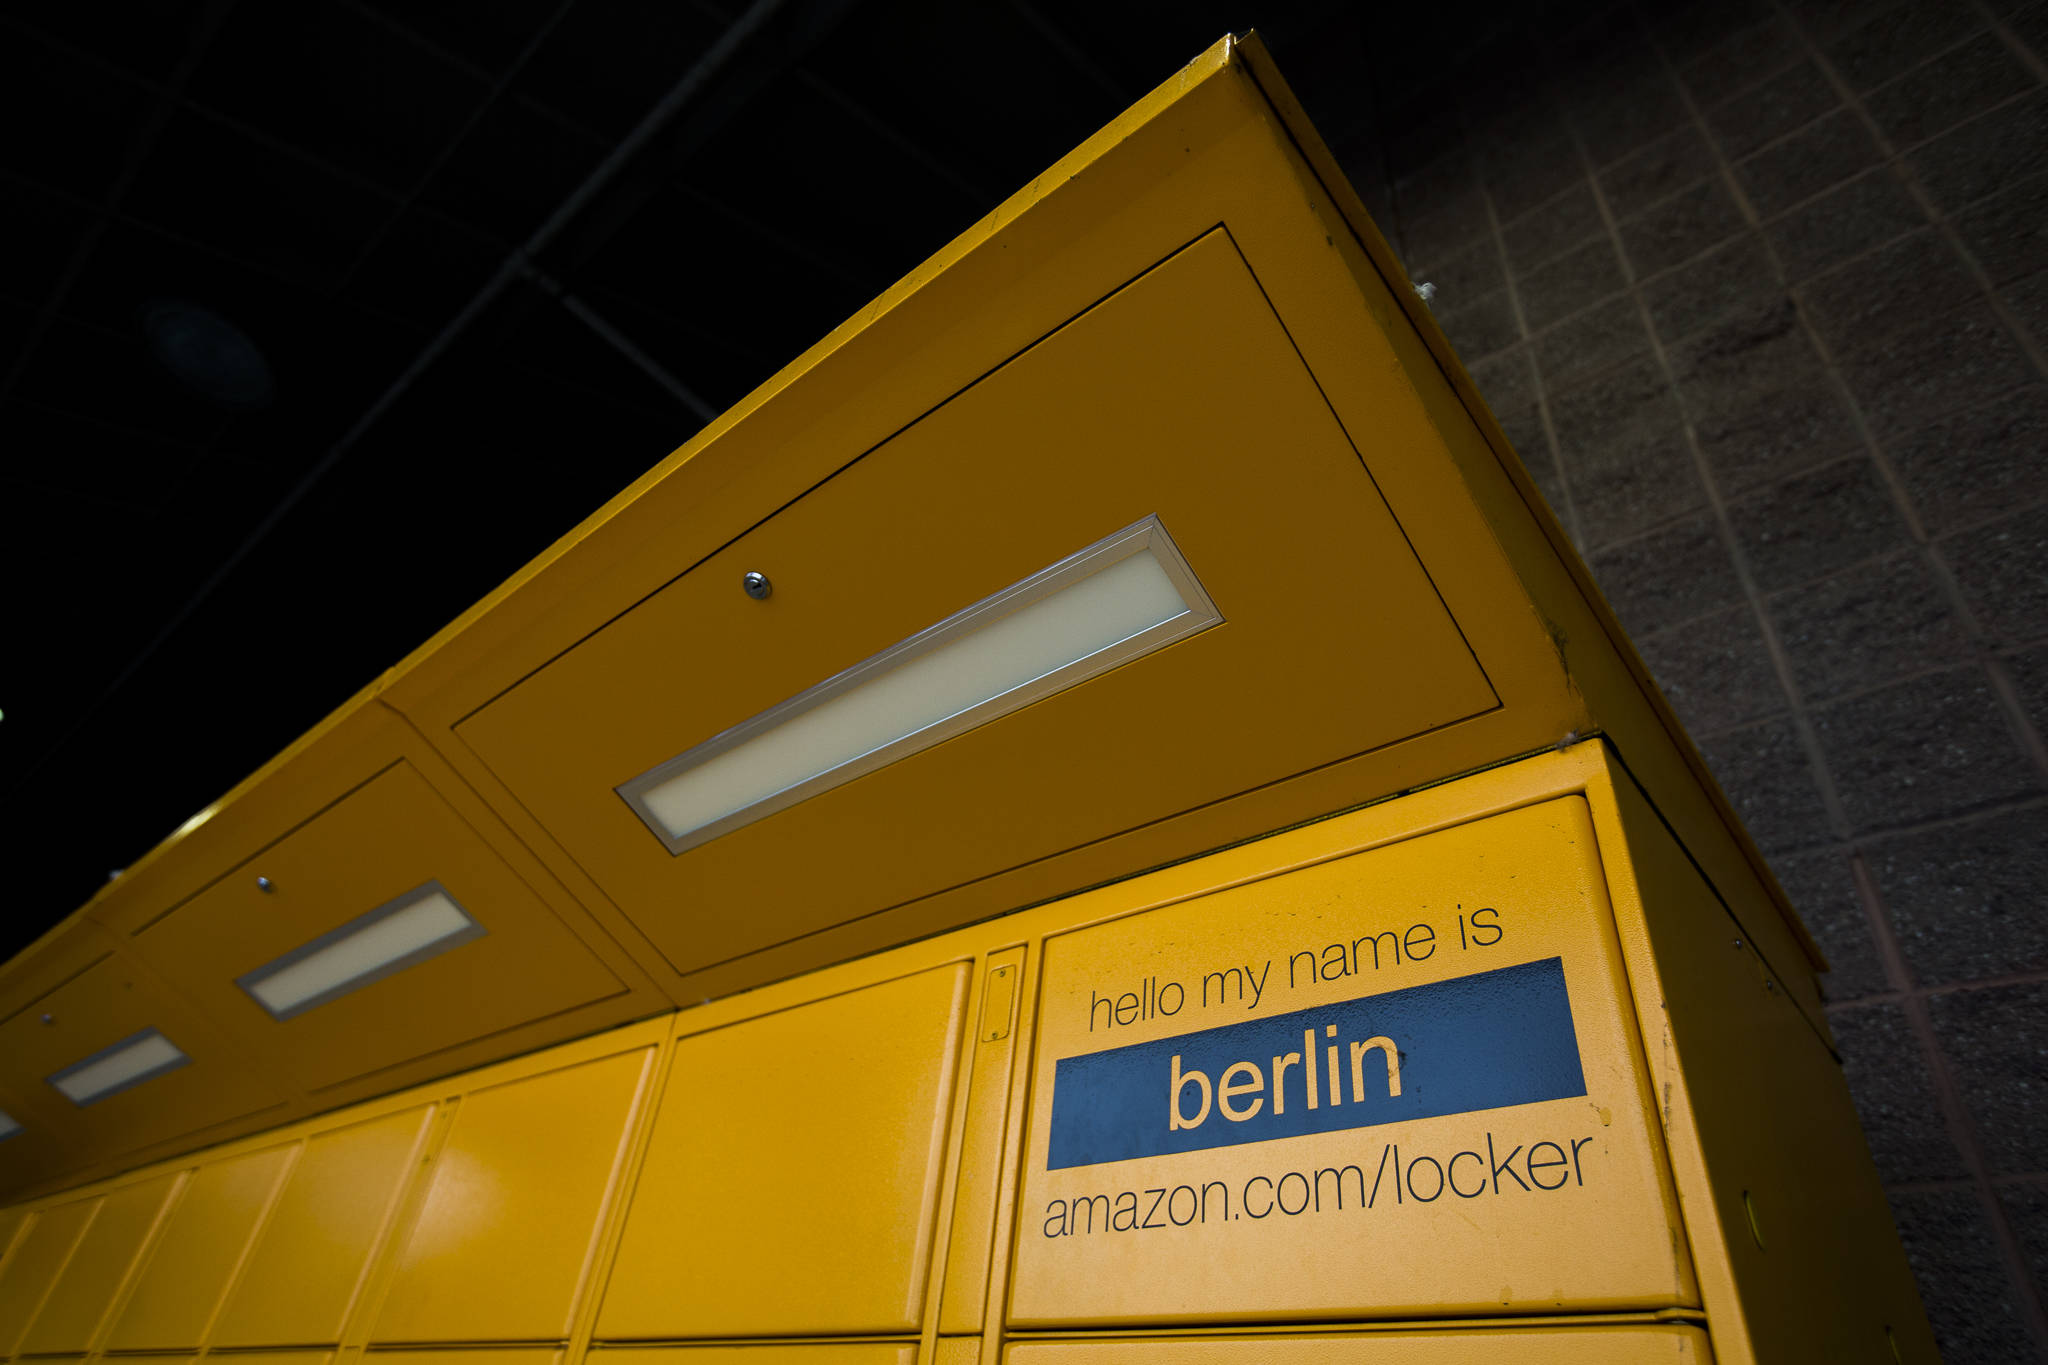 Amazon names its big, yellow lockers: Call me Iggy | HeraldNet.com